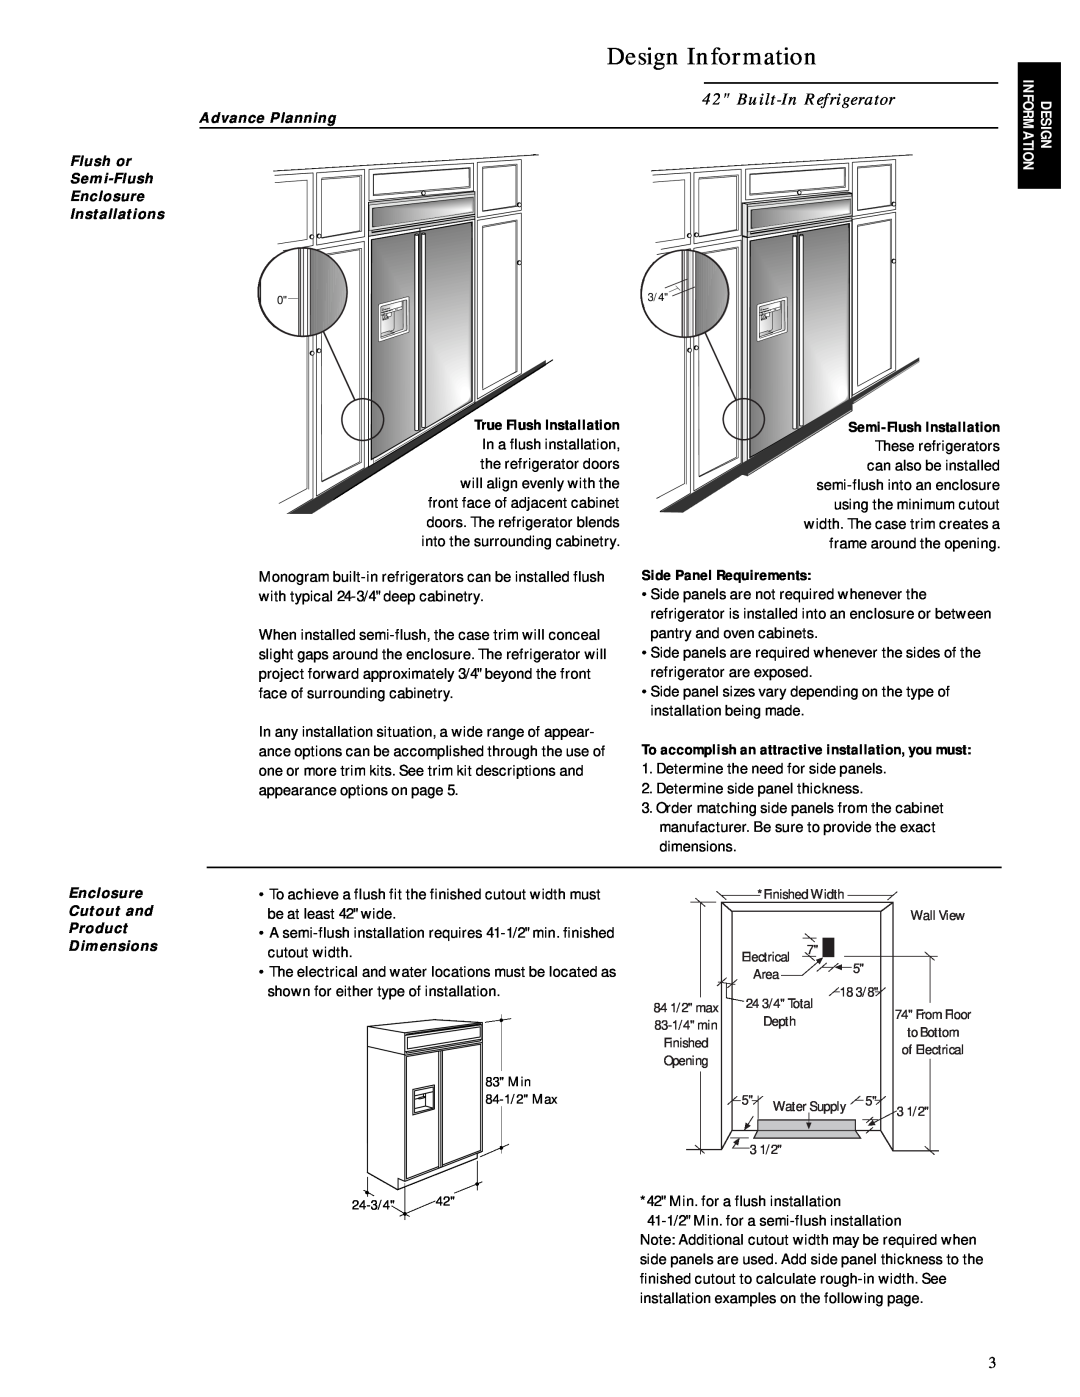 GE Monogram ZIS42N, ZISB42D Design Information, Built-In Refrigerator, True Flush Installation, Side Panel Requirements 